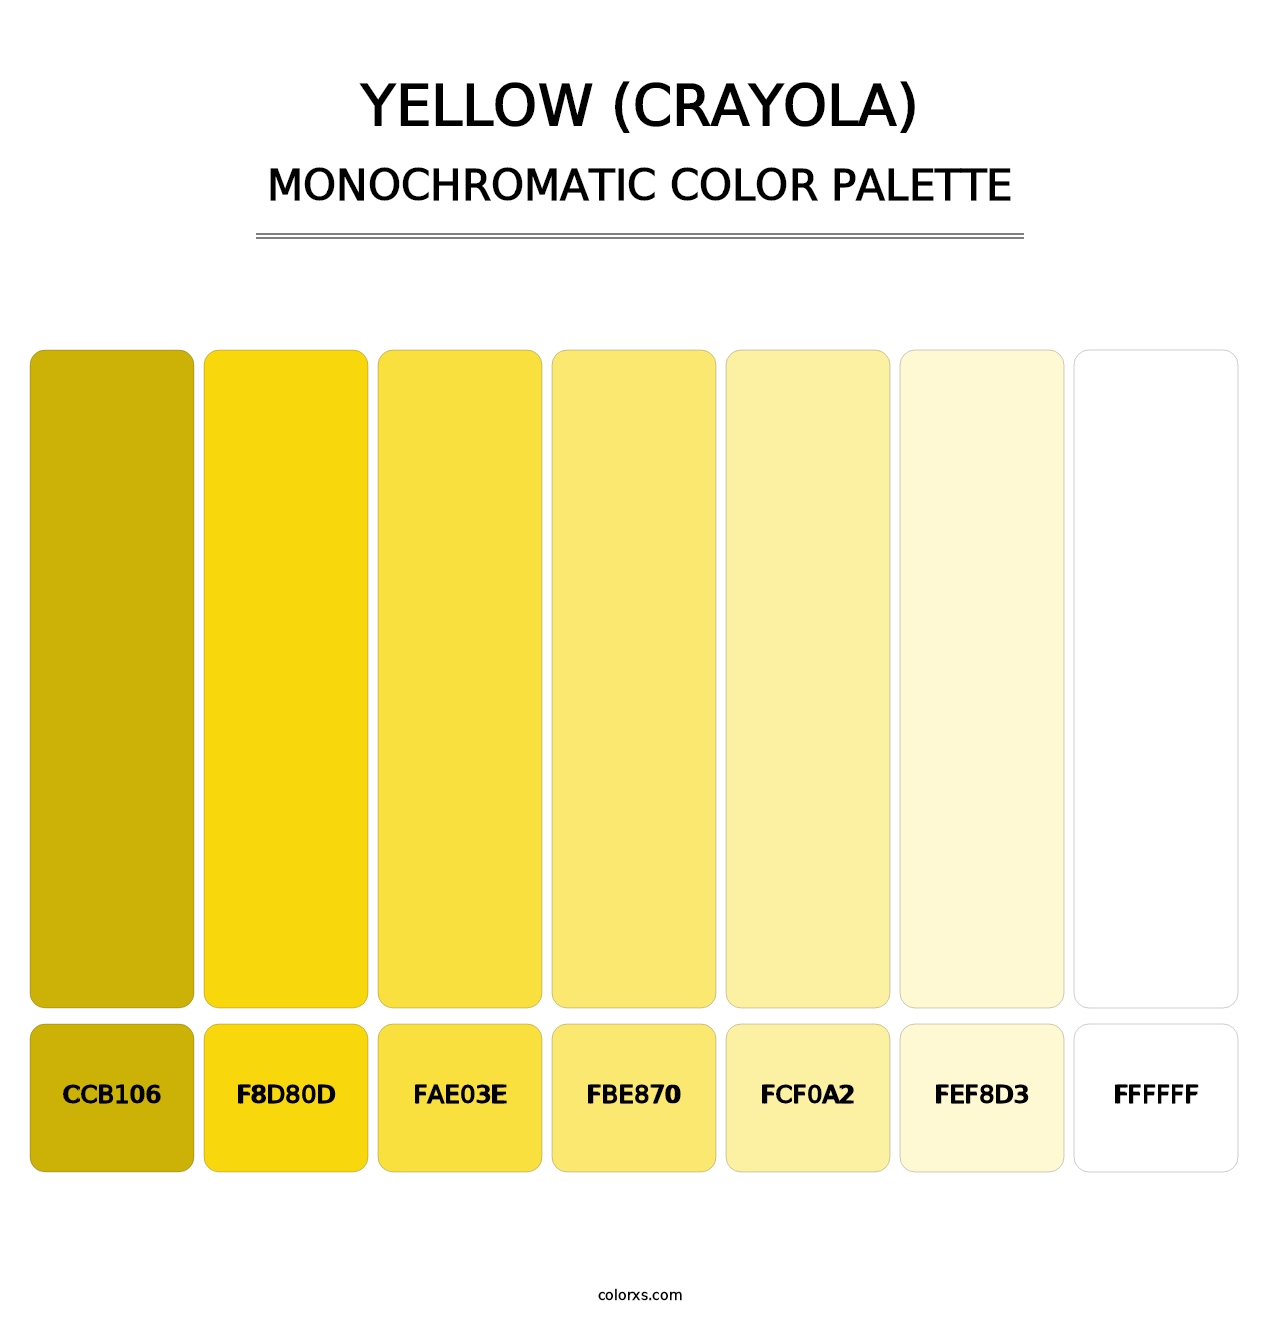 Yellow (Crayola) - Monochromatic Color Palette